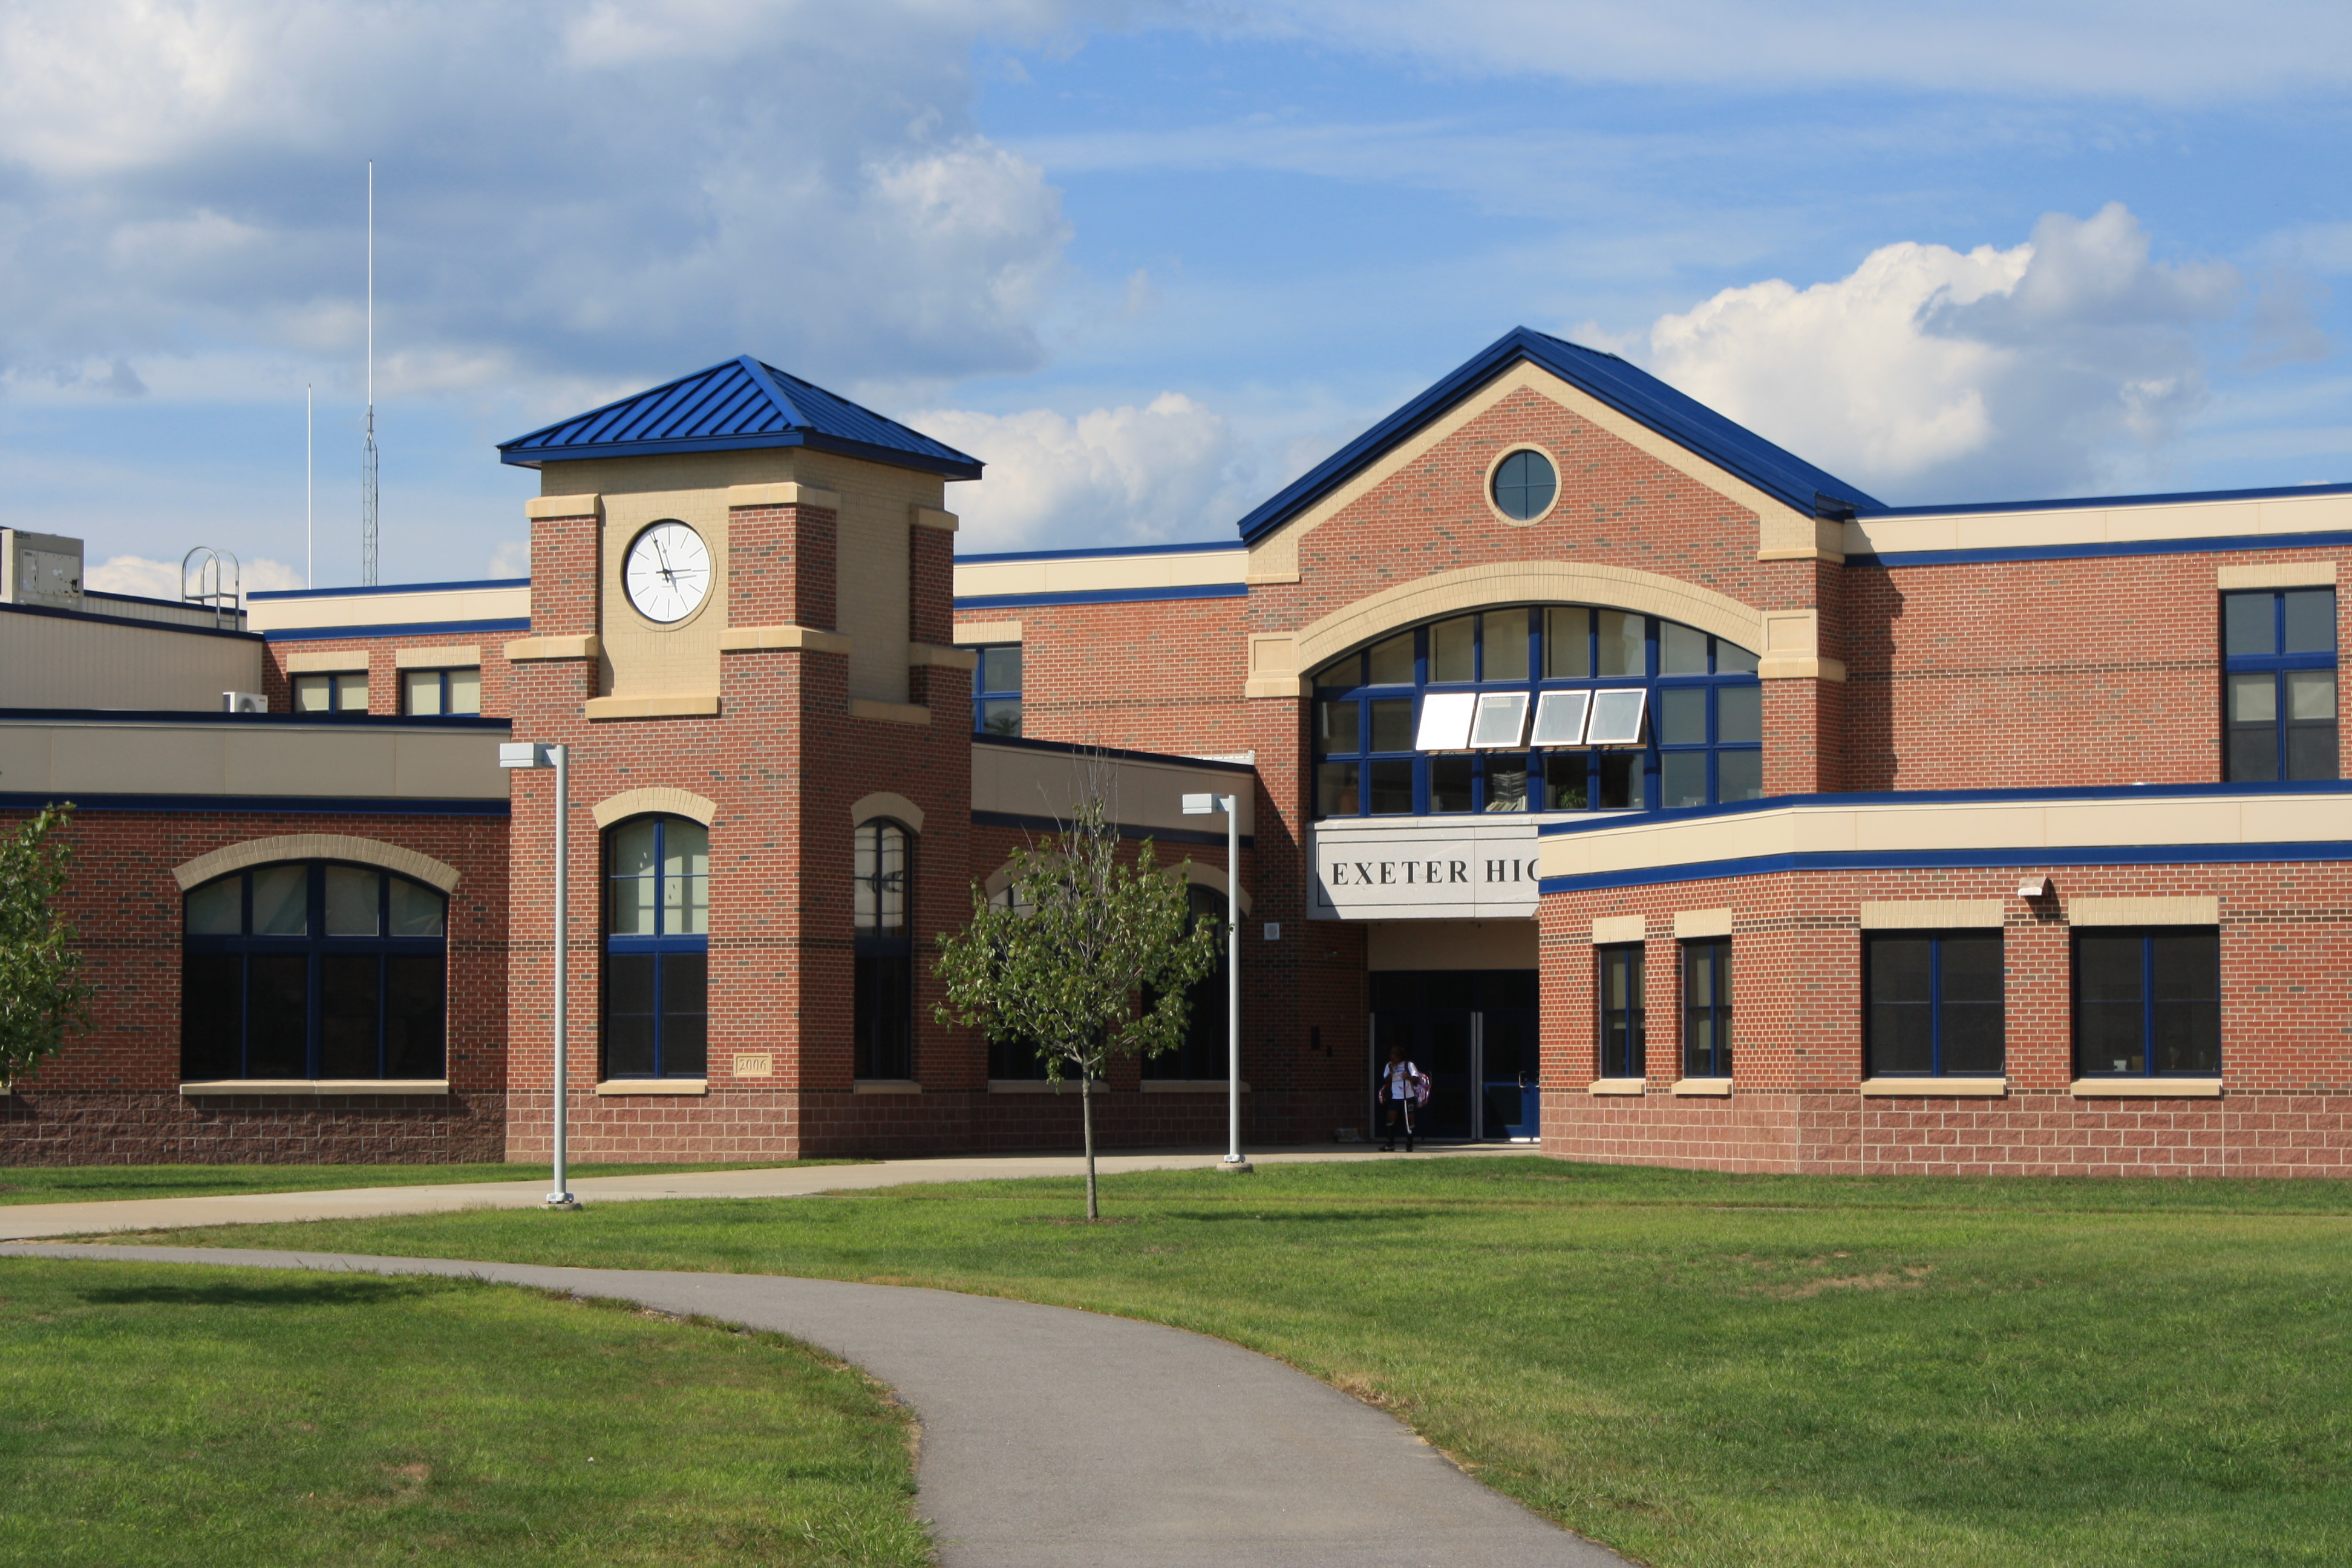 FileExeter High School (New Hampshire).jpg Wikipedia, the free